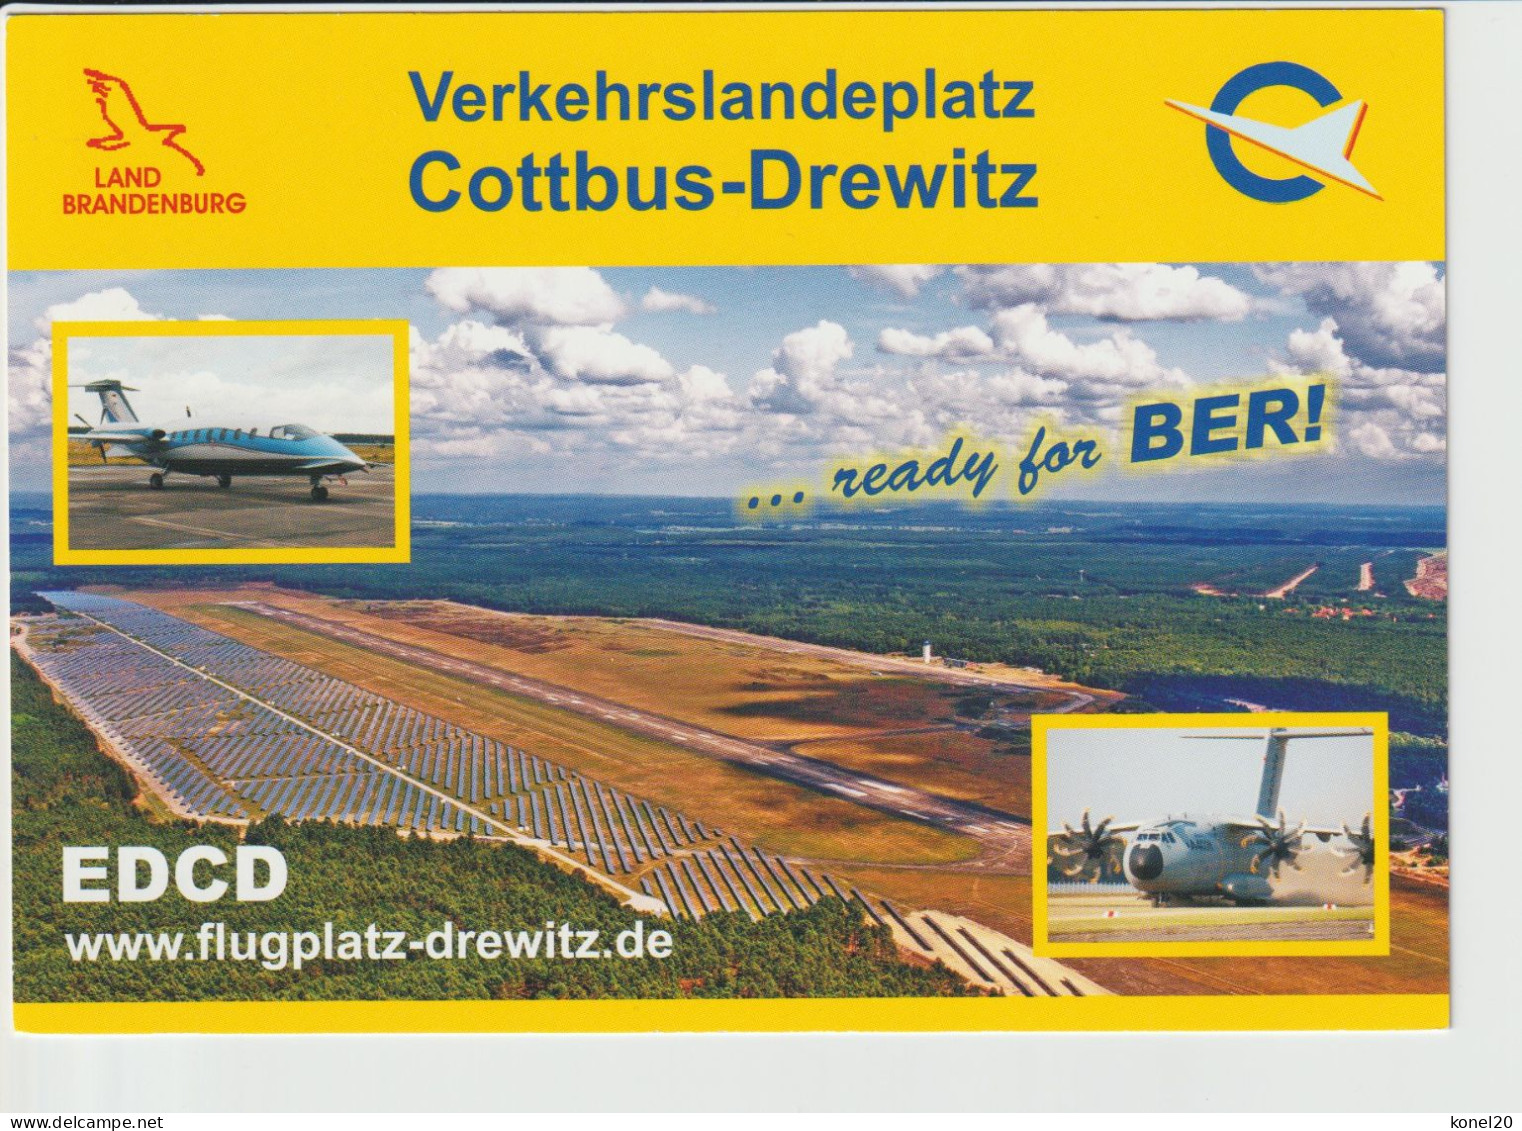 Promotioncard Verkehrlandeplatz Cottbus-Drewitz - 1919-1938